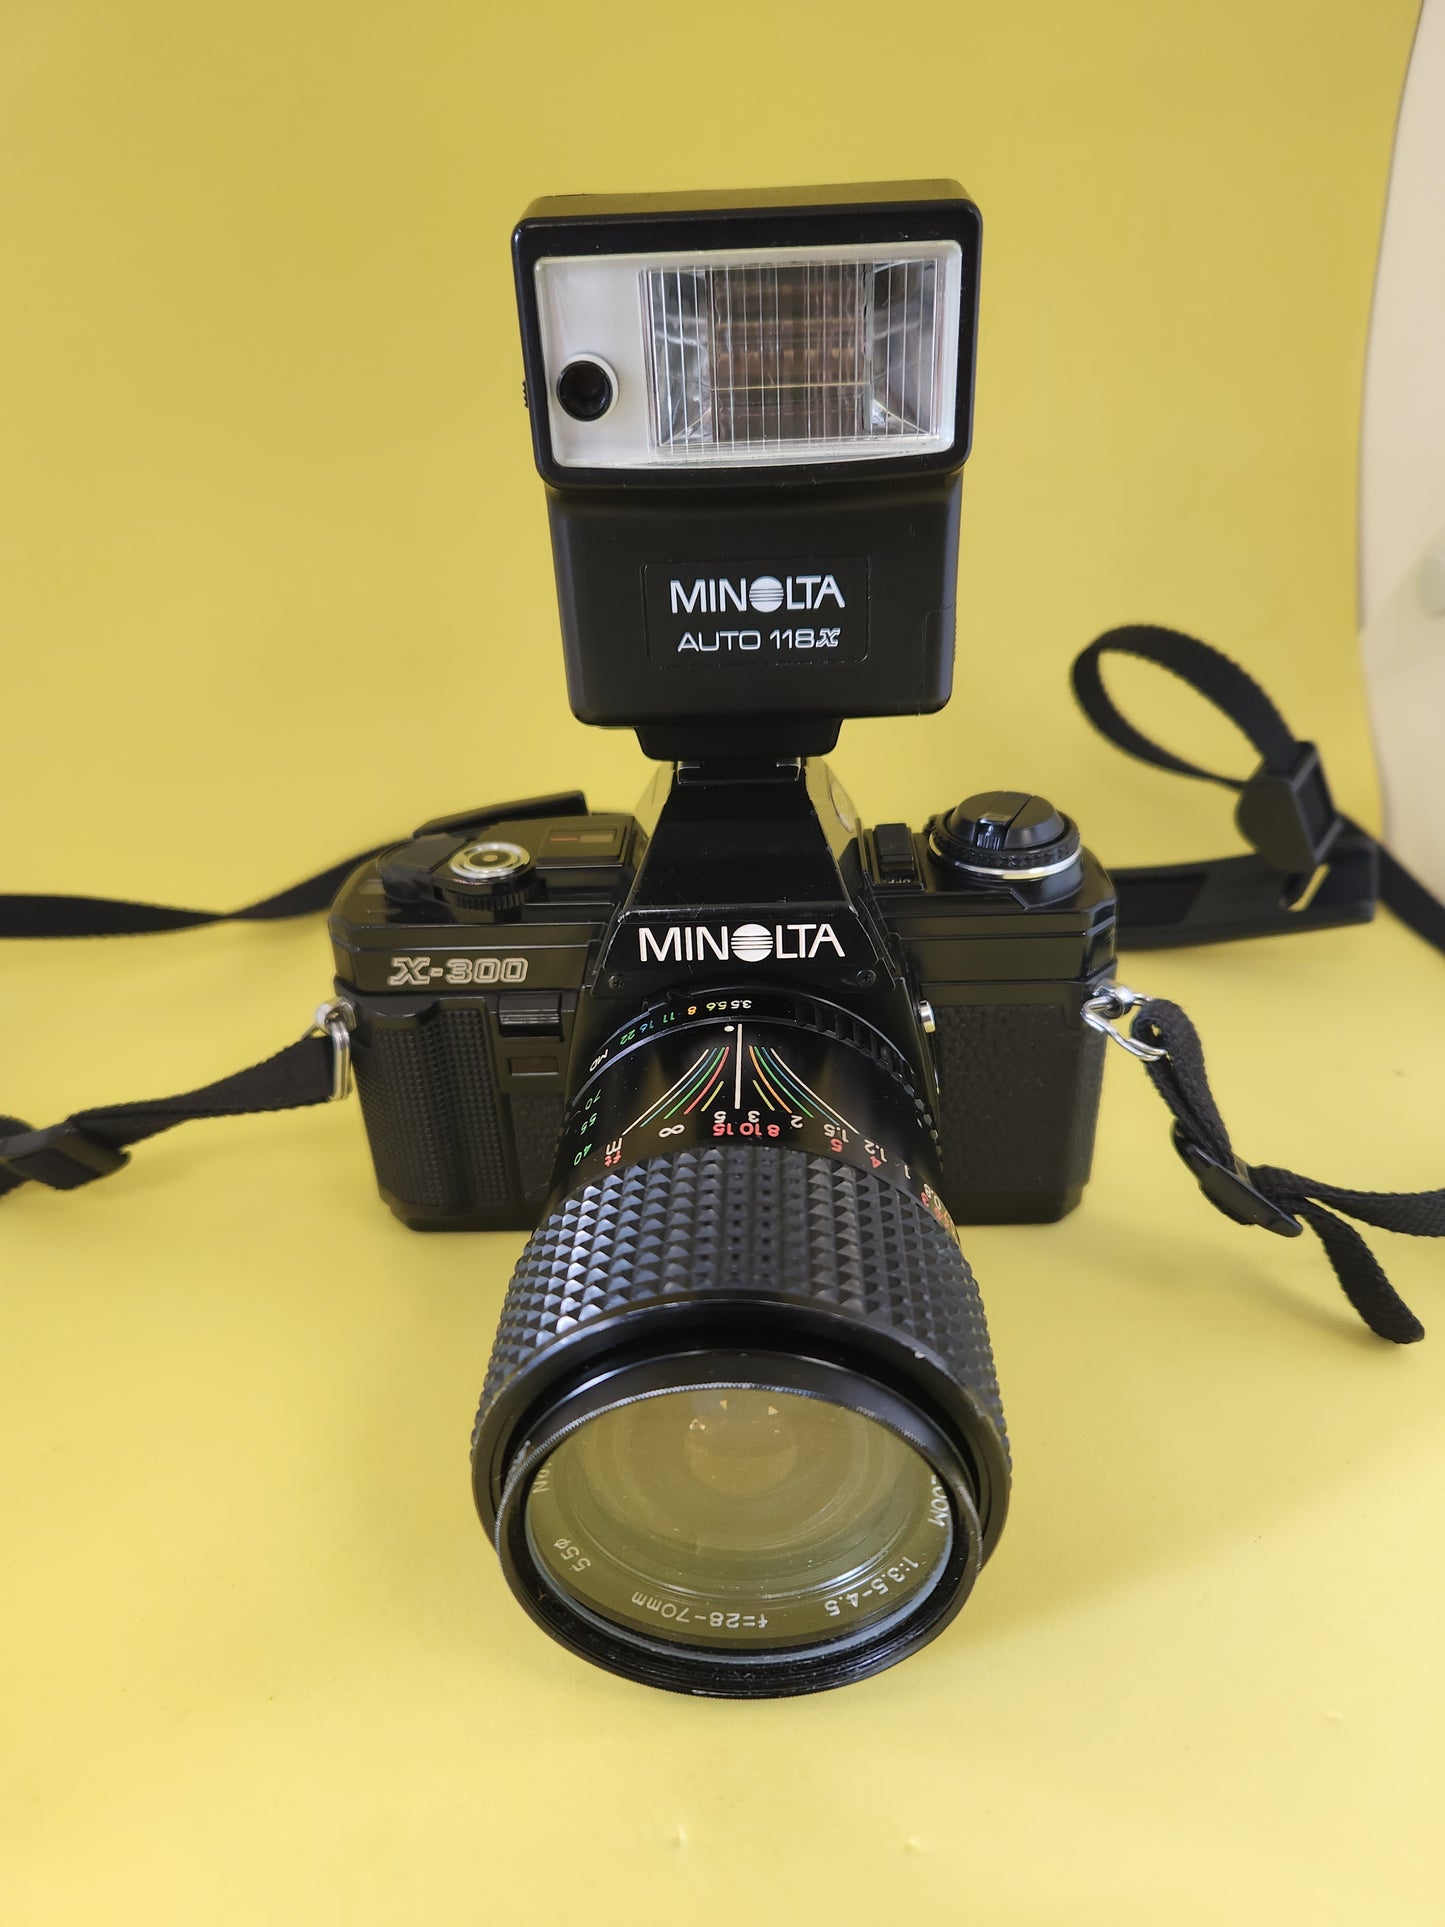 Minolta x300 with flash light